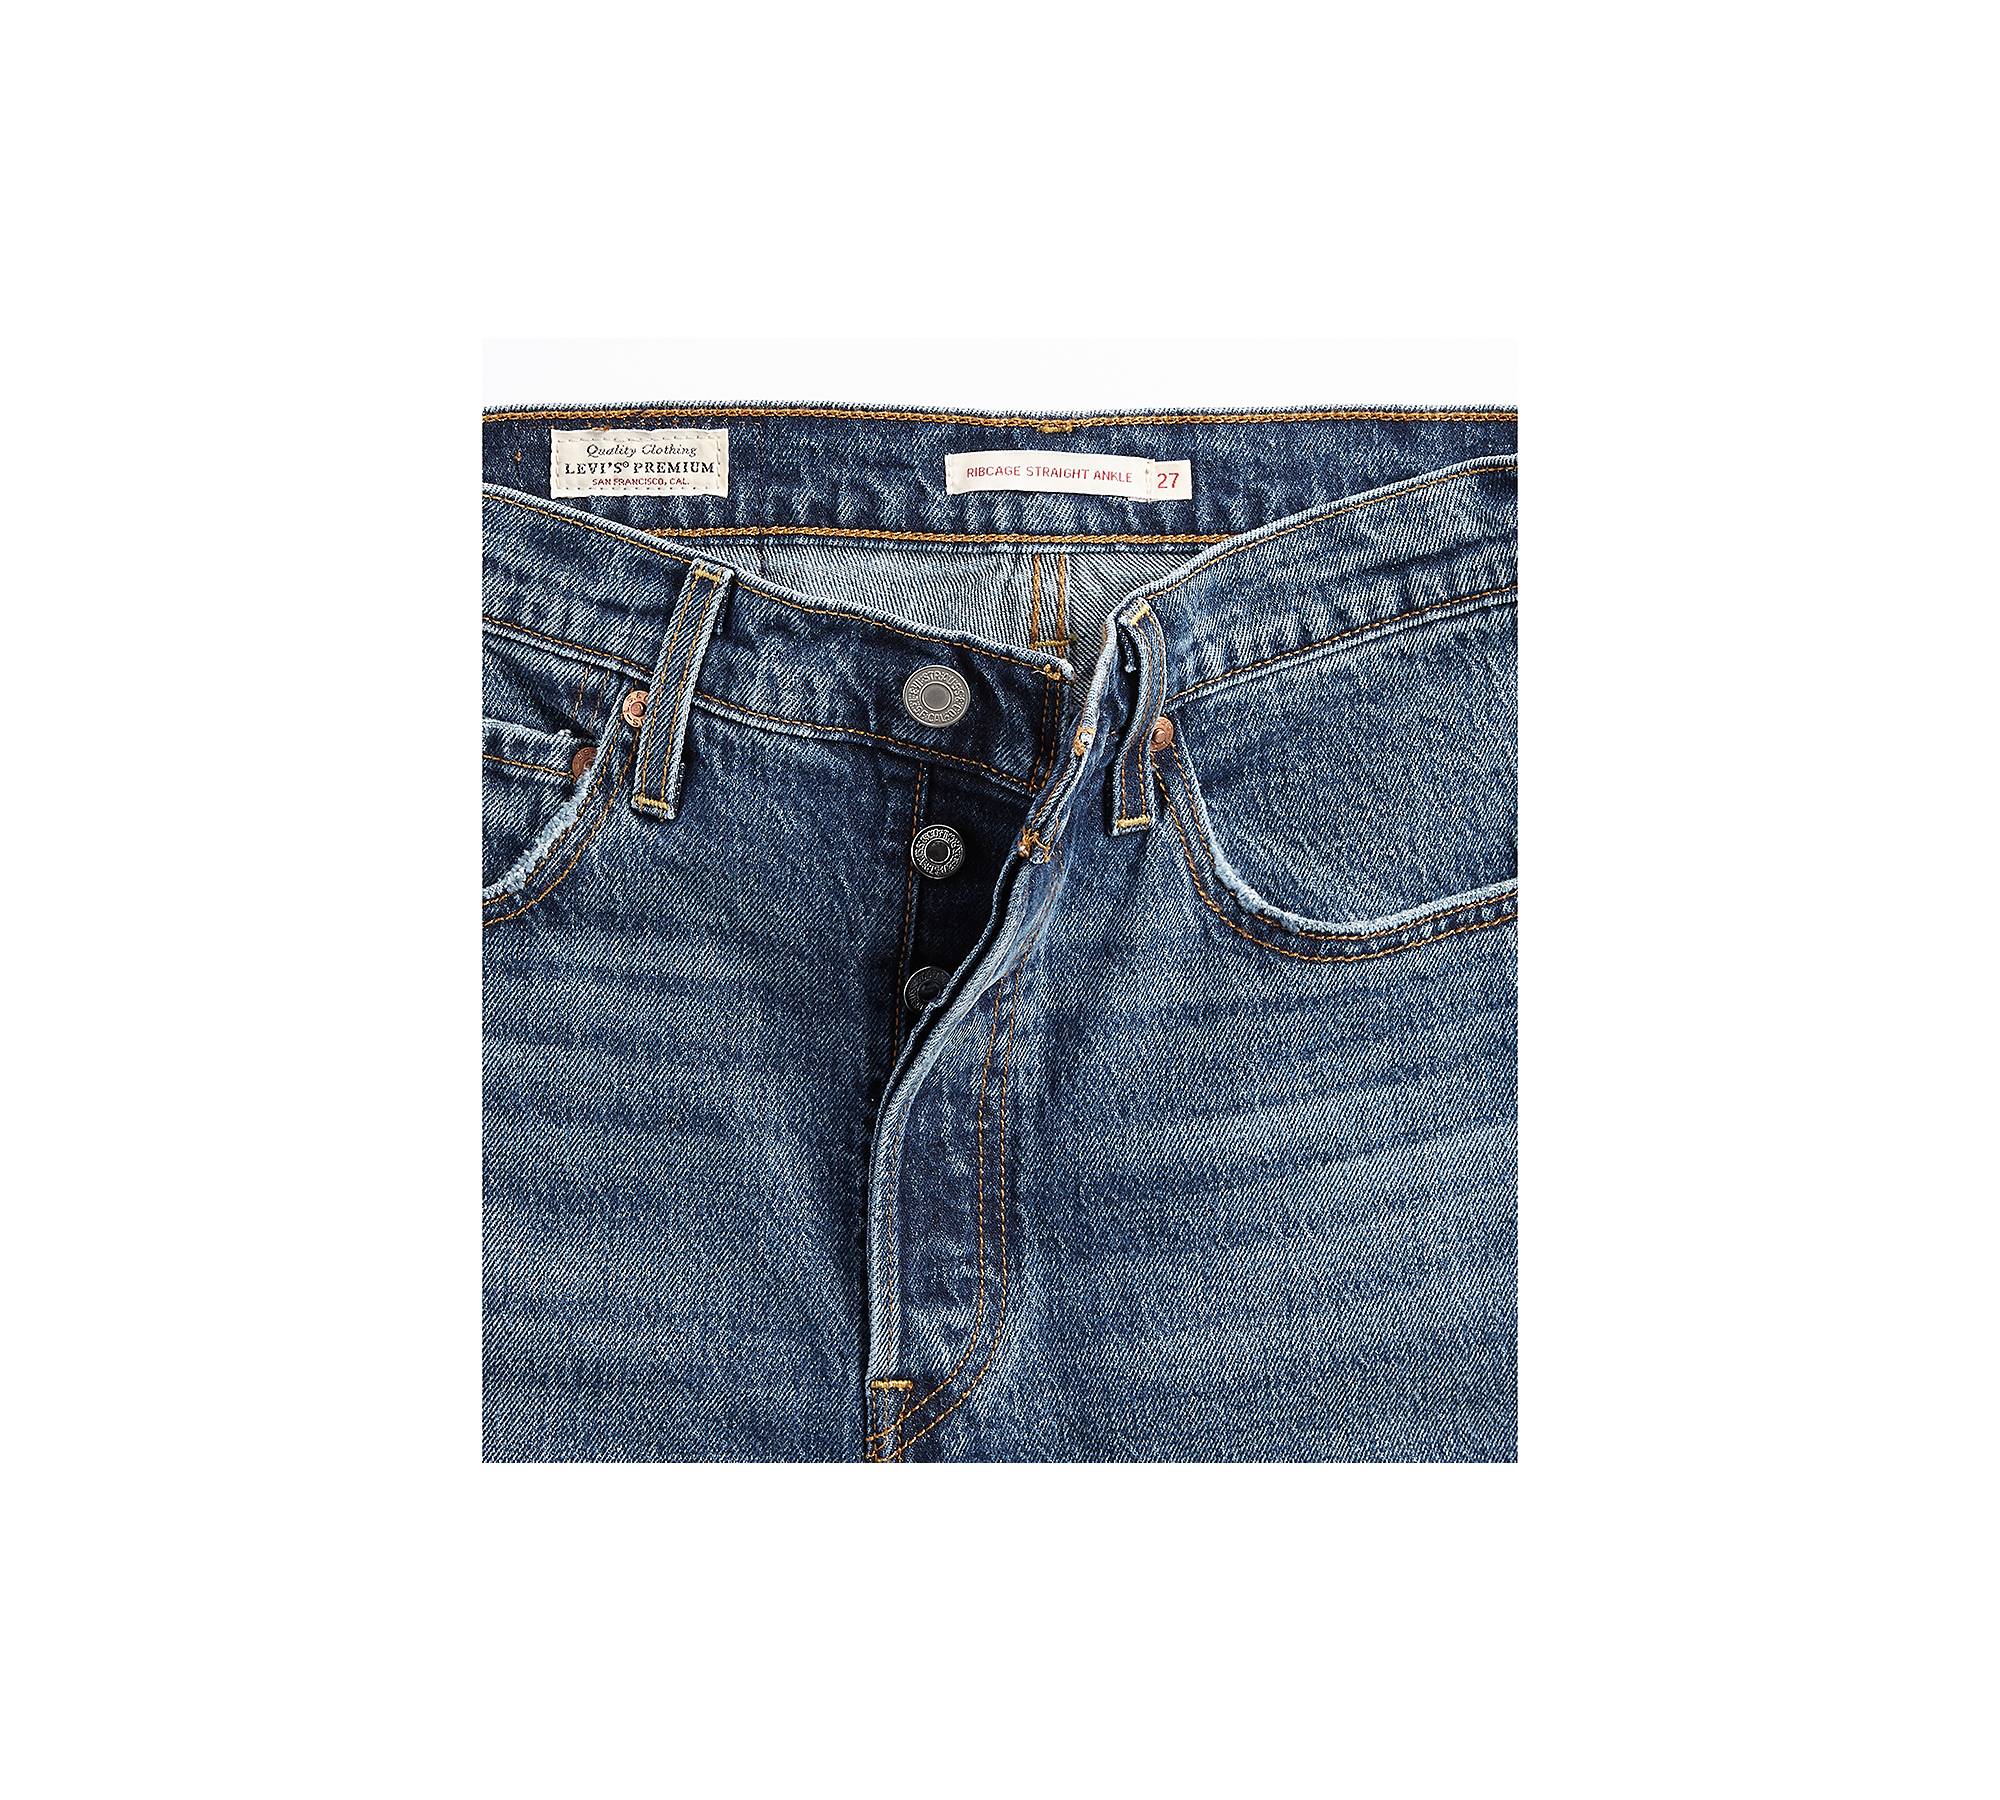 Ribcage No Back Pocket Women's Jeans - Dark Wash